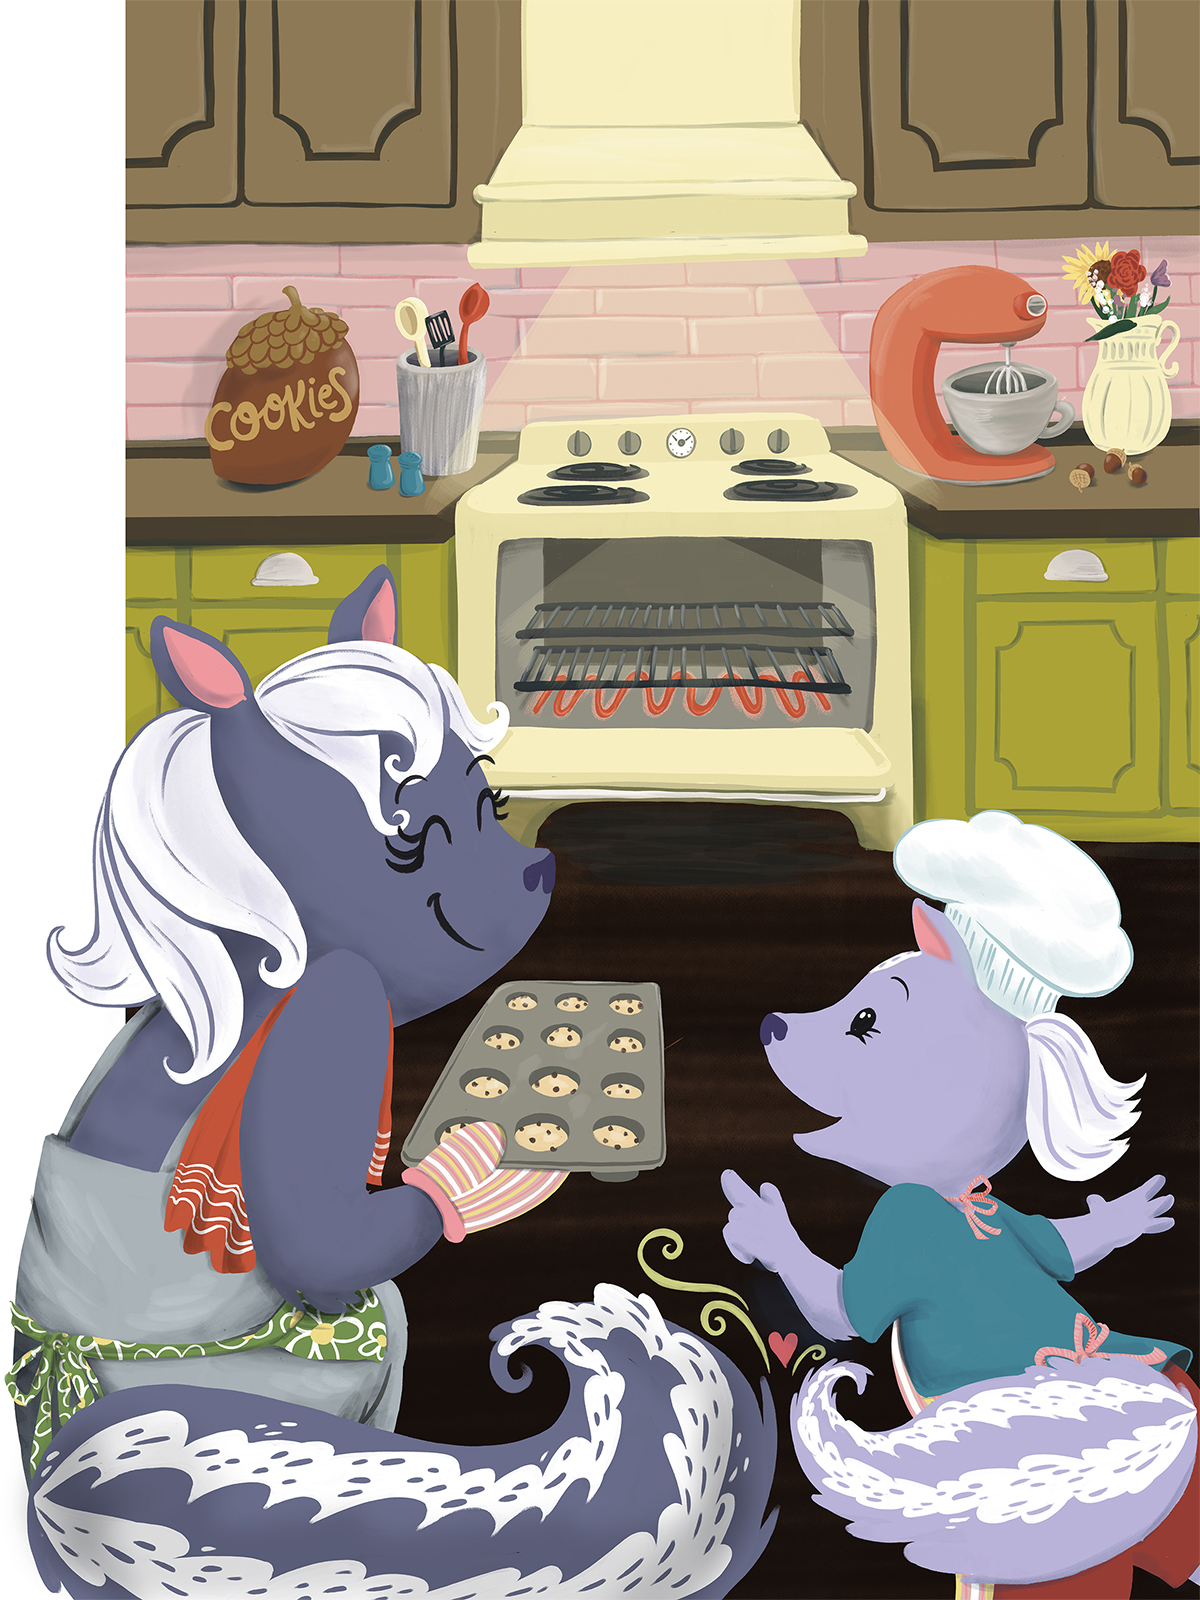 "Baking Muffins with Mom" by freelance illustrator Steph Calvert